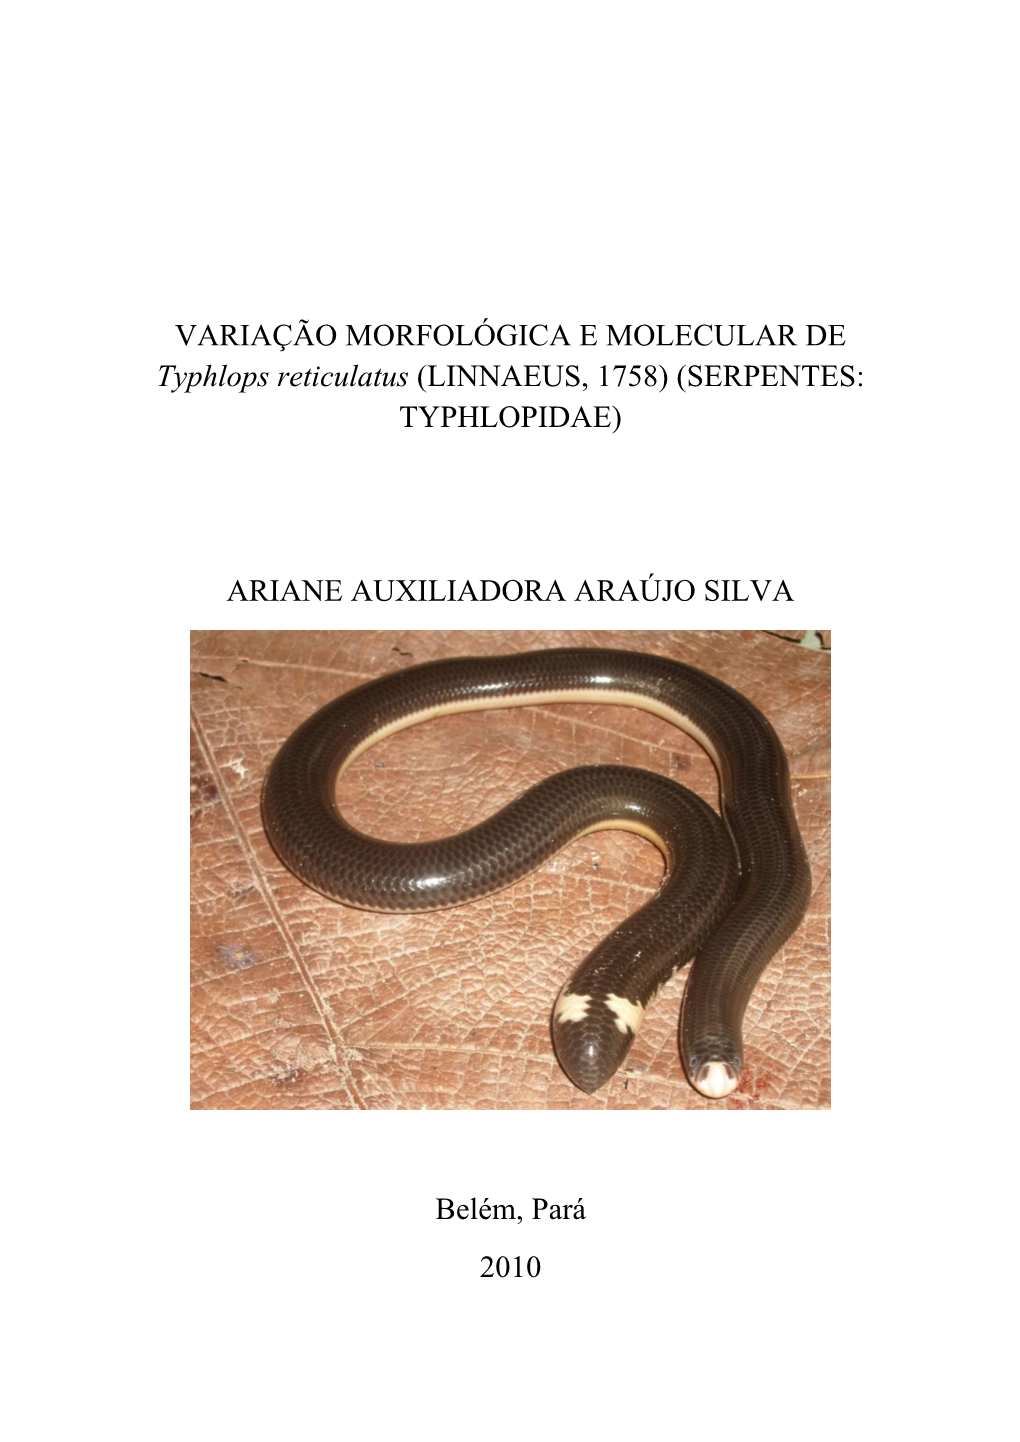 Serpentes: Typhlopidae)